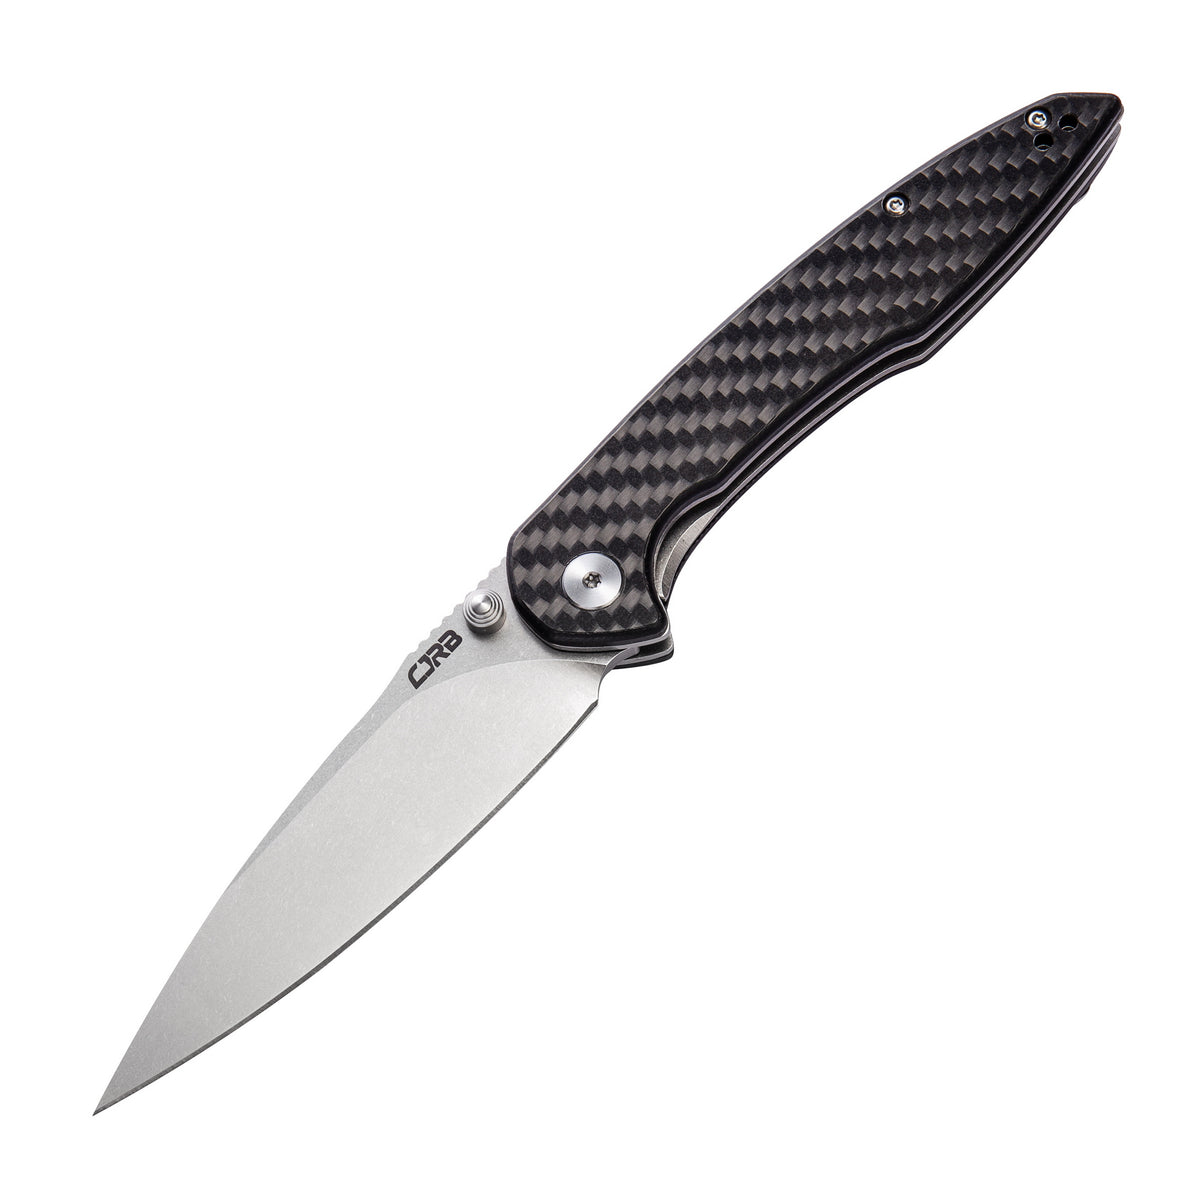 CJRB Centros J1905 D2 Blade Carbon fiber Handle Folding Knives